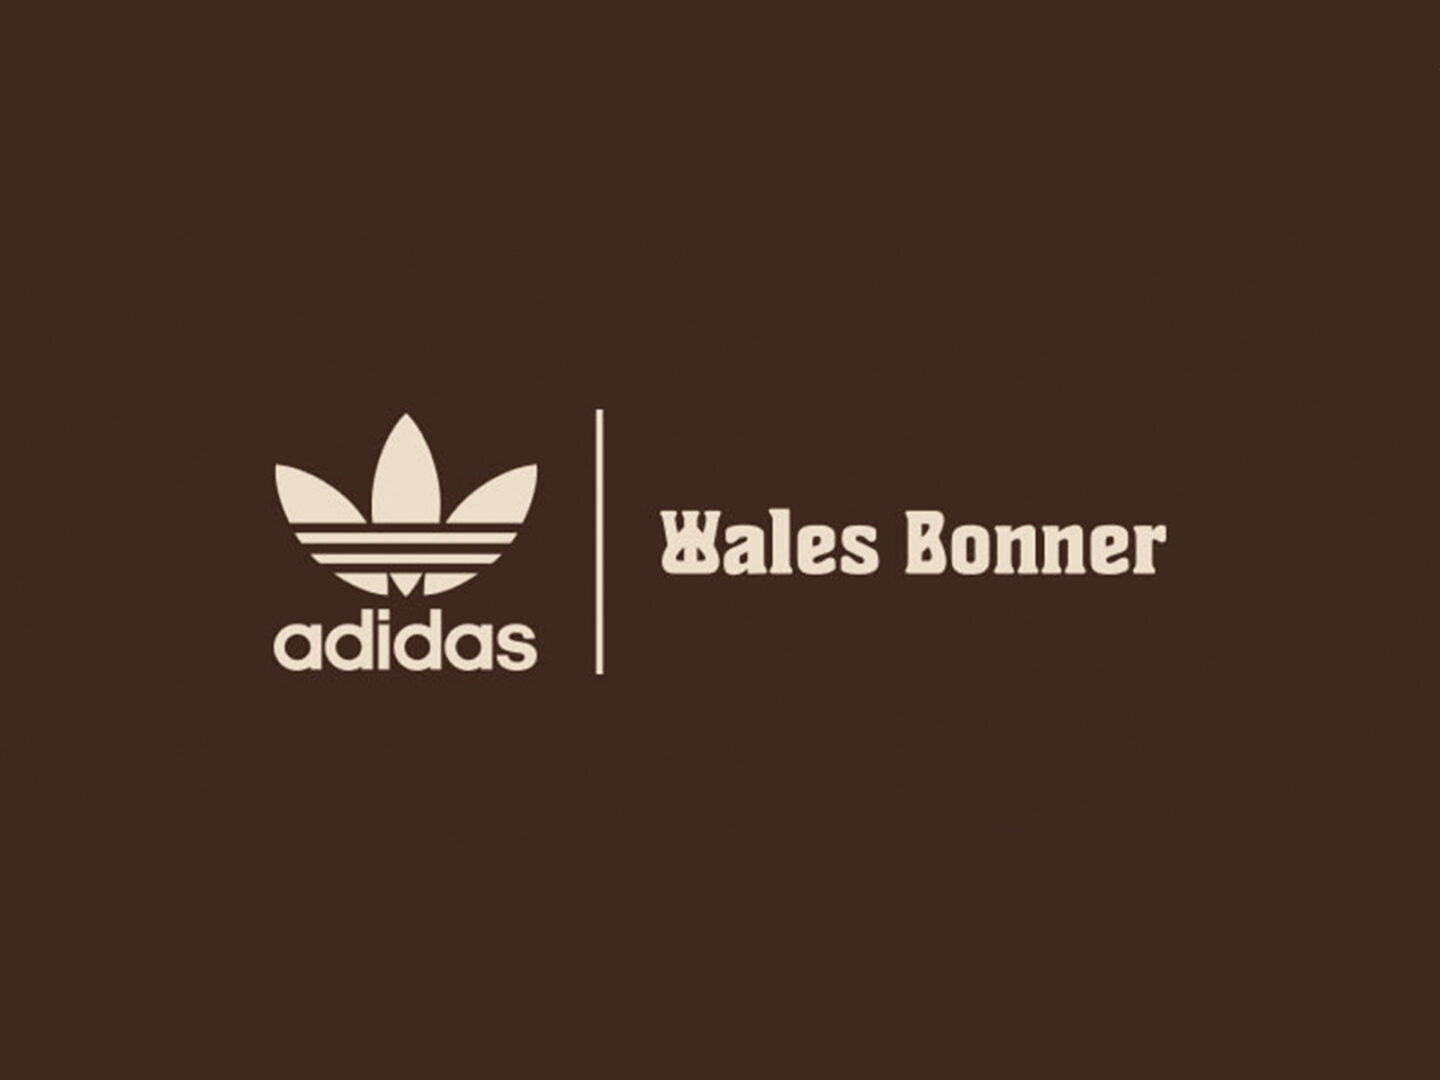 Wales Bonner’s adidas Samba gets an update this autumn